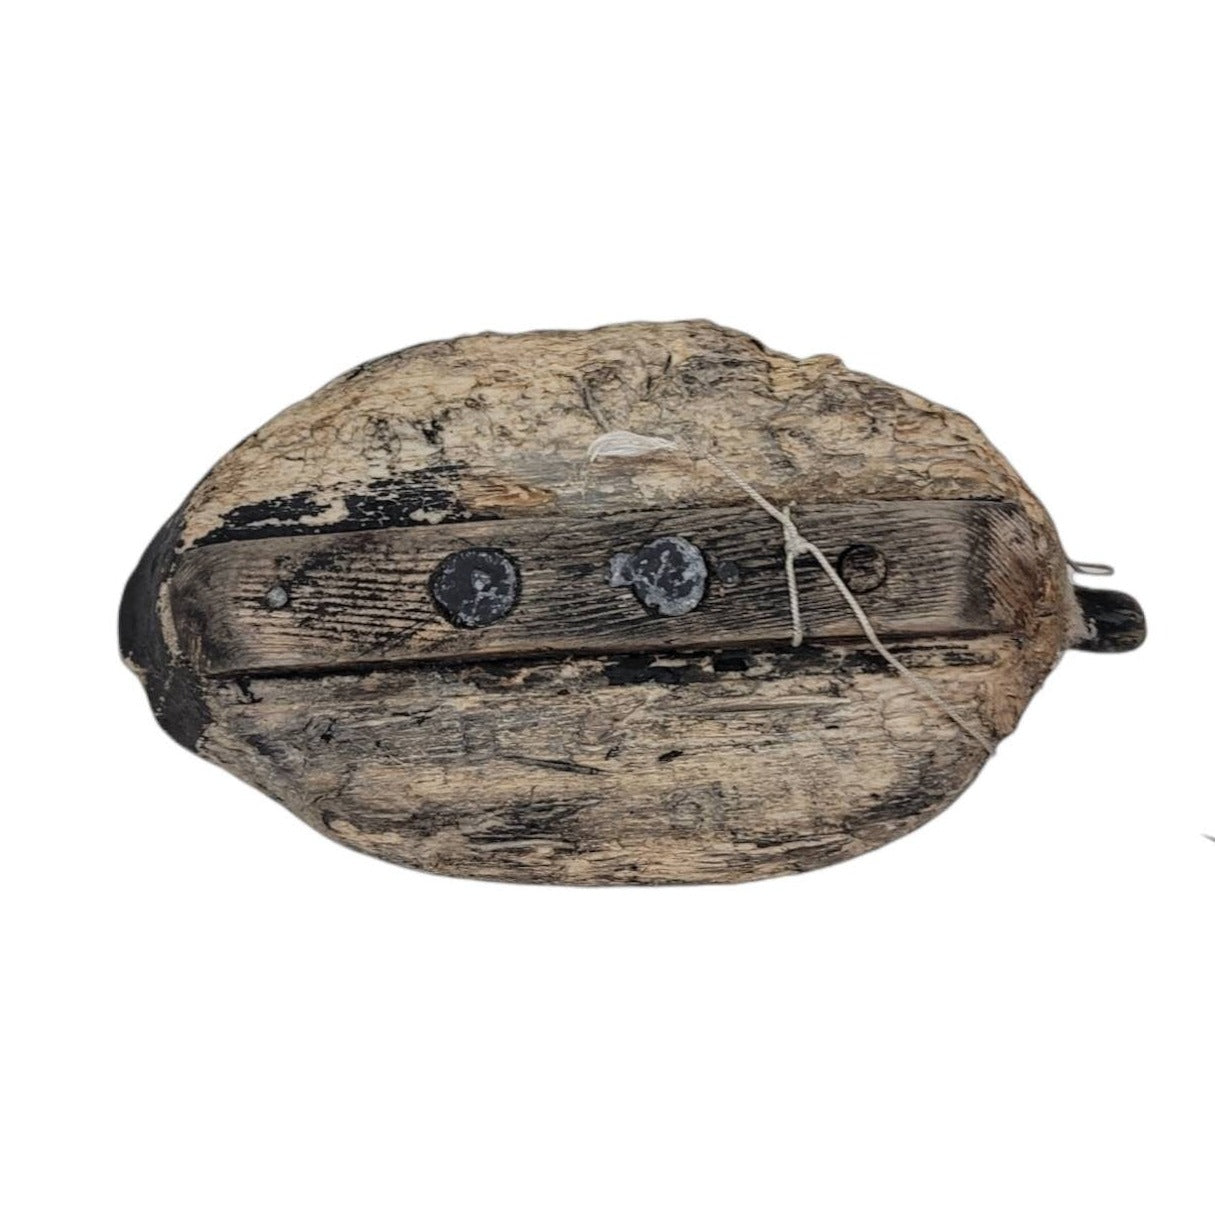 wooden decoy duck vintage hunting accessories